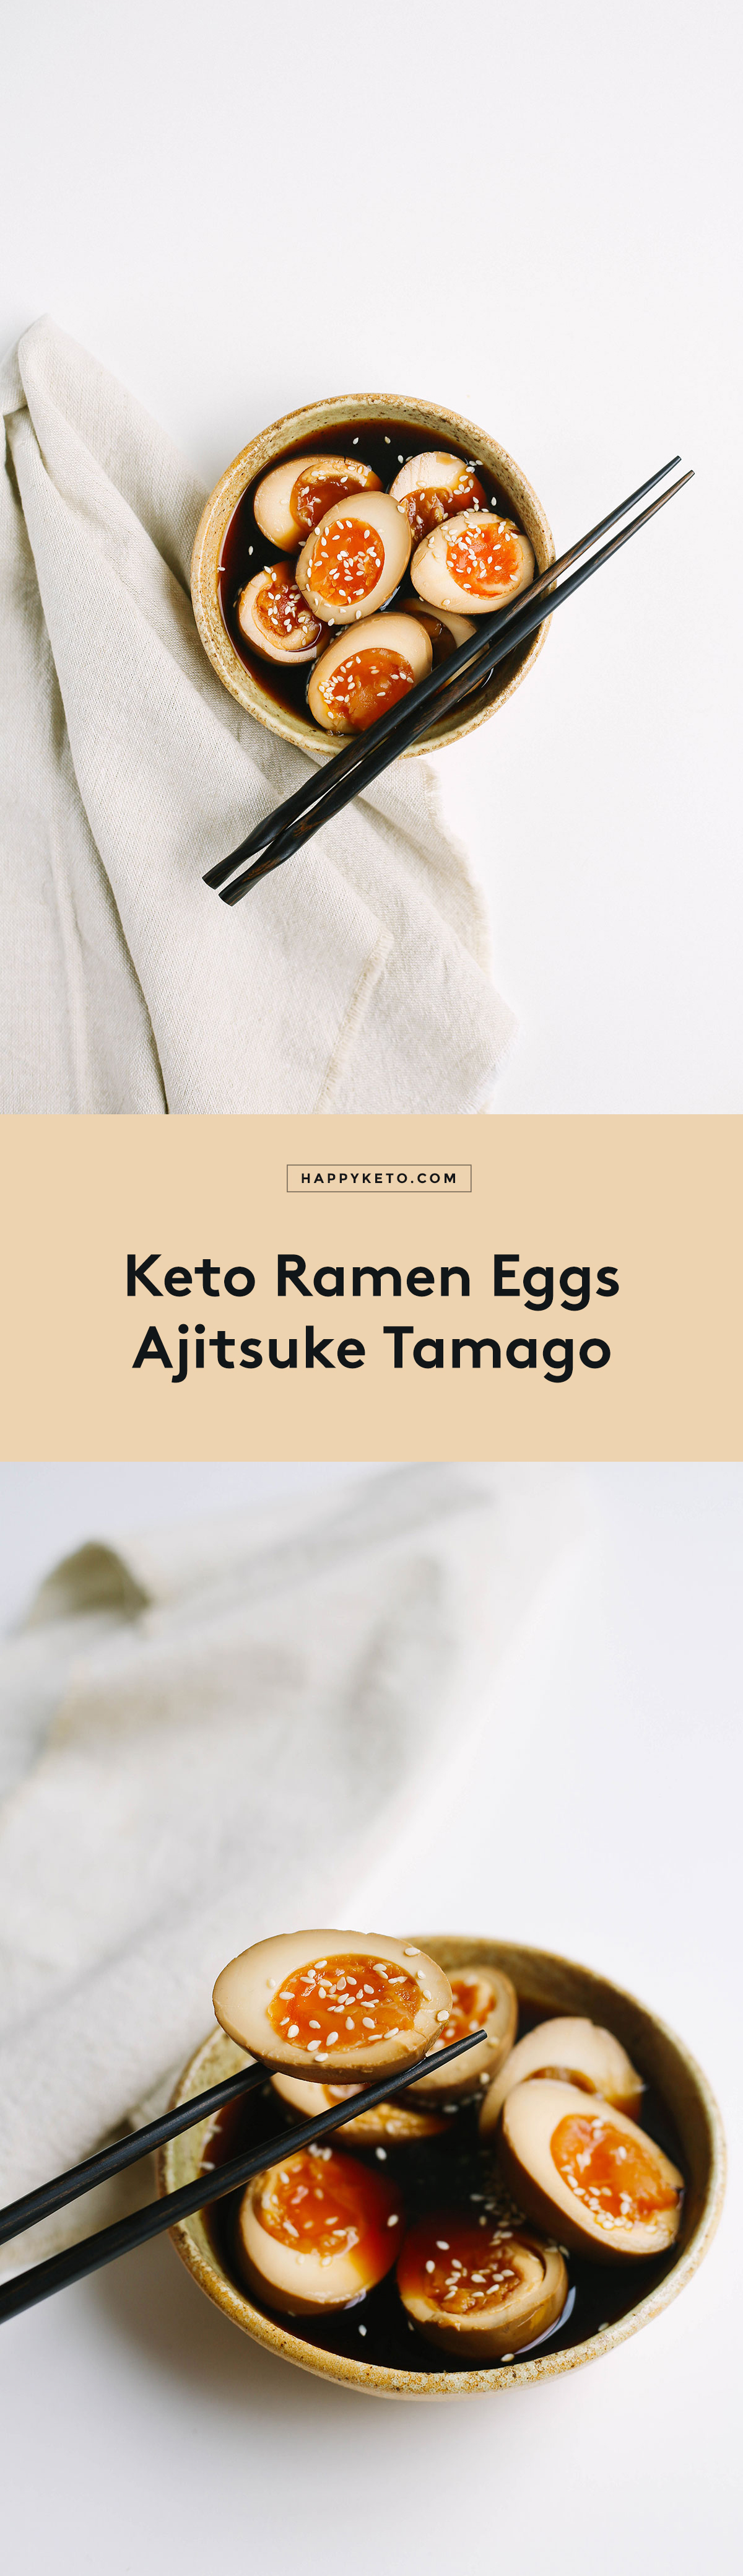 Keto Ramen Eggs for ketogenic and low carb. Easy recipe with eggs and tamari. keto, keto eggs, keto ramen eggs, keto japanese eggs, keto soy eggs, keto egg recipes, keto ajitsuke tamago, keto eggs low carb, keto recipes, ketogenic diet, keto japan, keto japanese, keto tamari, keto easy recipes, keto easy, keto meals, keto quick meals, keto recipes easy, low carb, low carb recipes, low carb eggs, lchf, lchf recipes